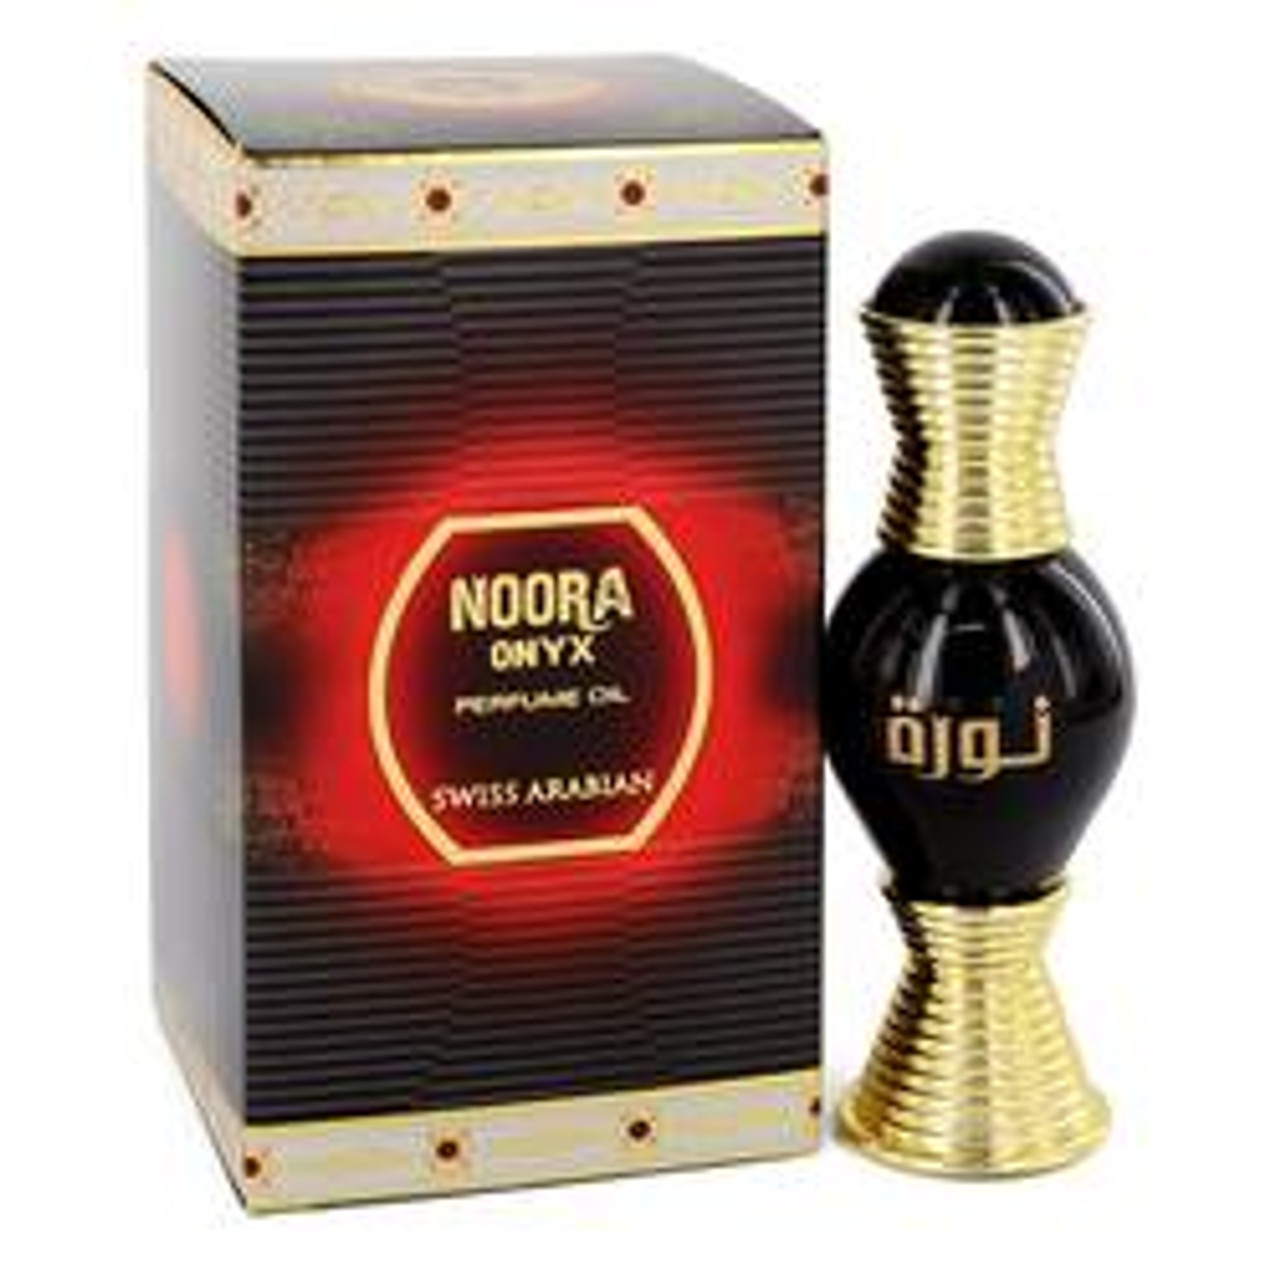 Swiss Arabian Noora Onyx Perfume By Swiss Arabian Perfume Oil 0.67 oz for Women - [From 88.00 - Choose pk Qty ] - *Ships from Miami